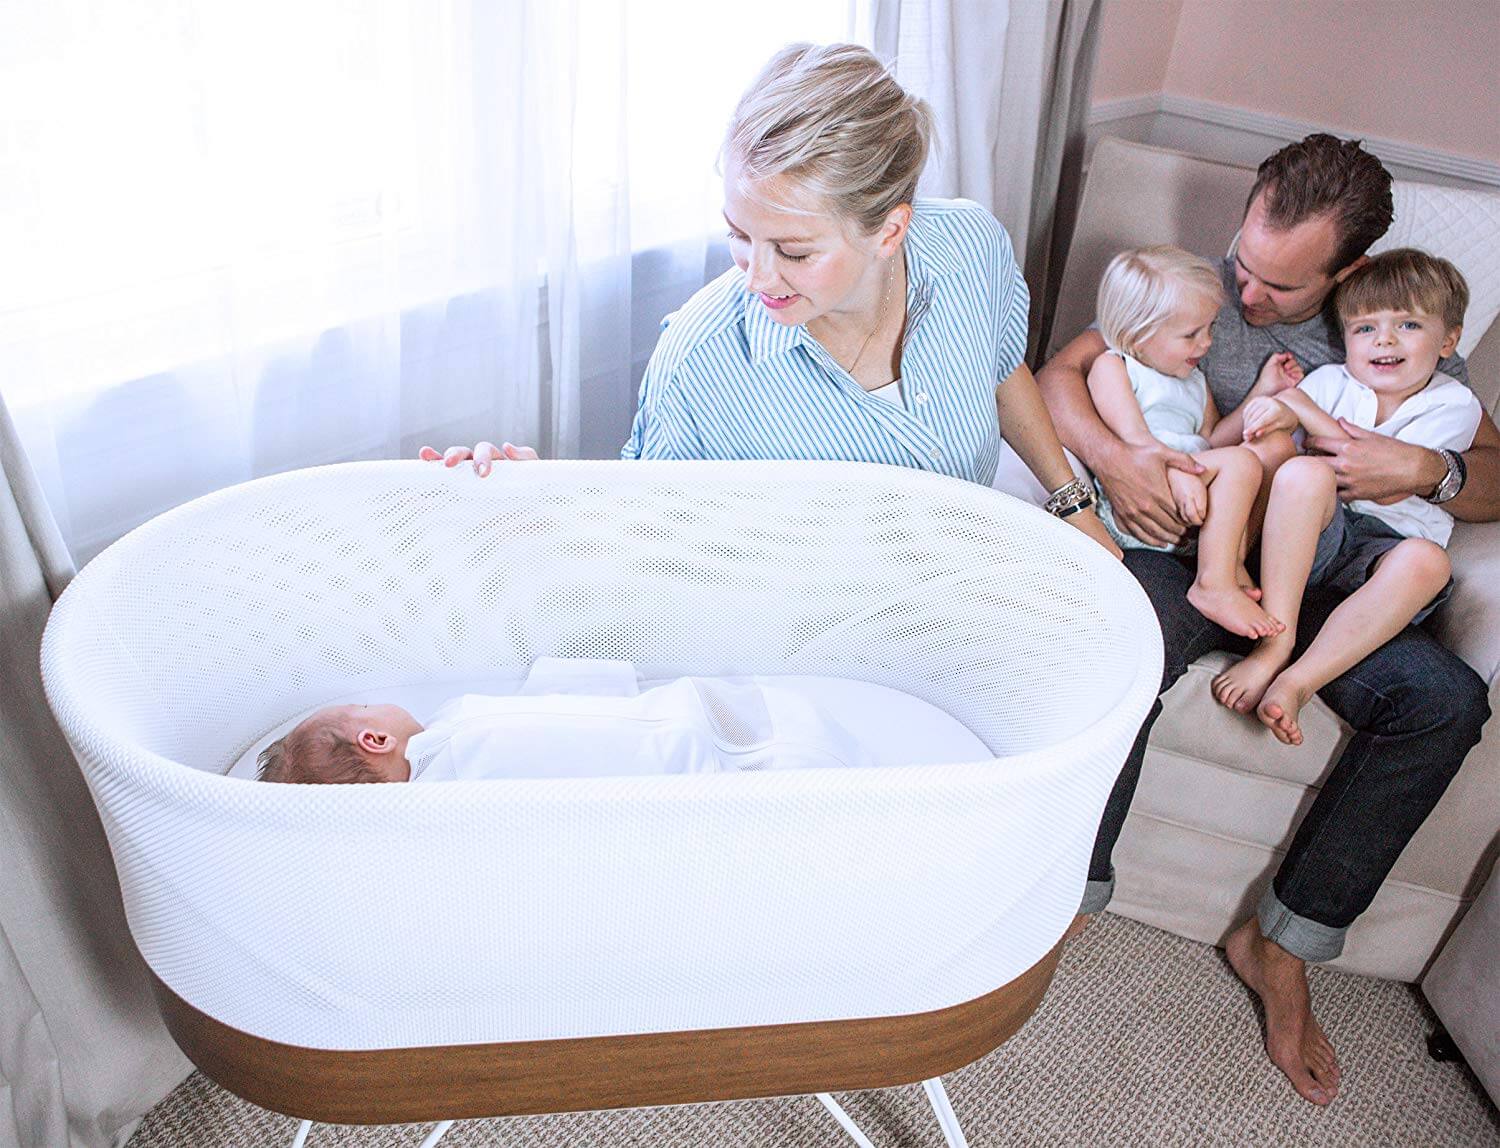 safest bassinet for baby 2019